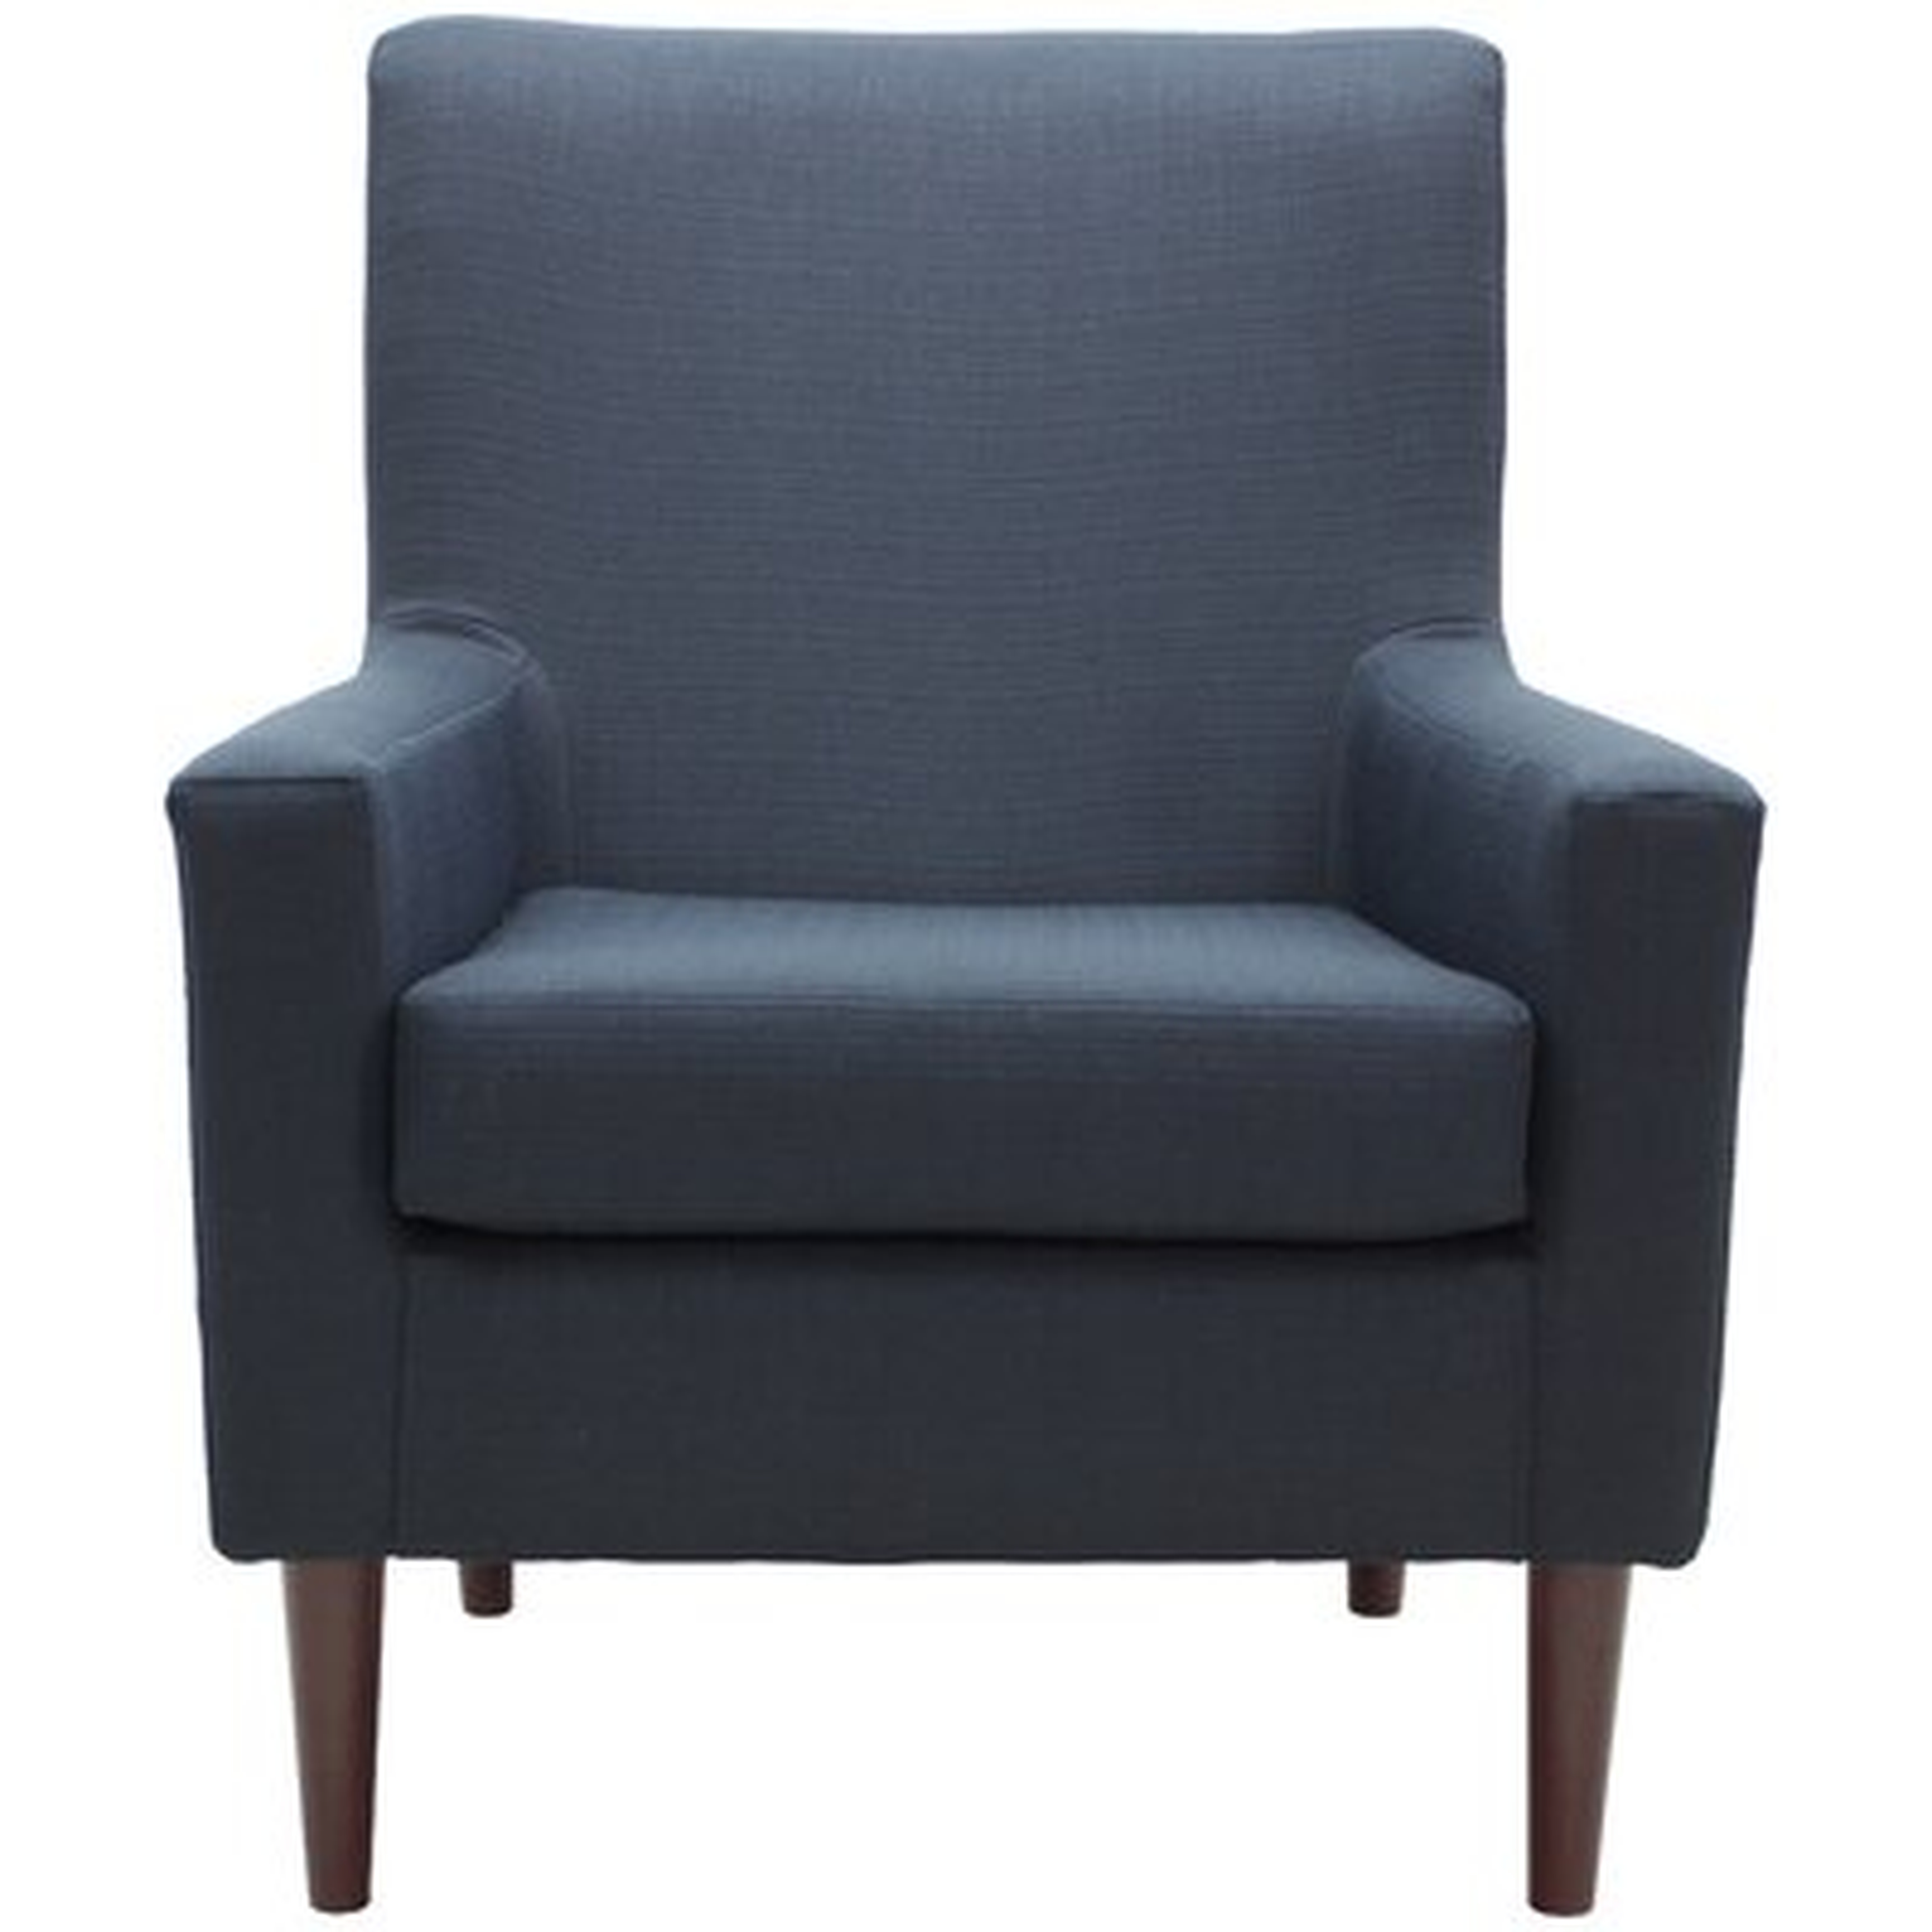 Donham Polyester Lounge Chair, Midnight Blue - Wayfair